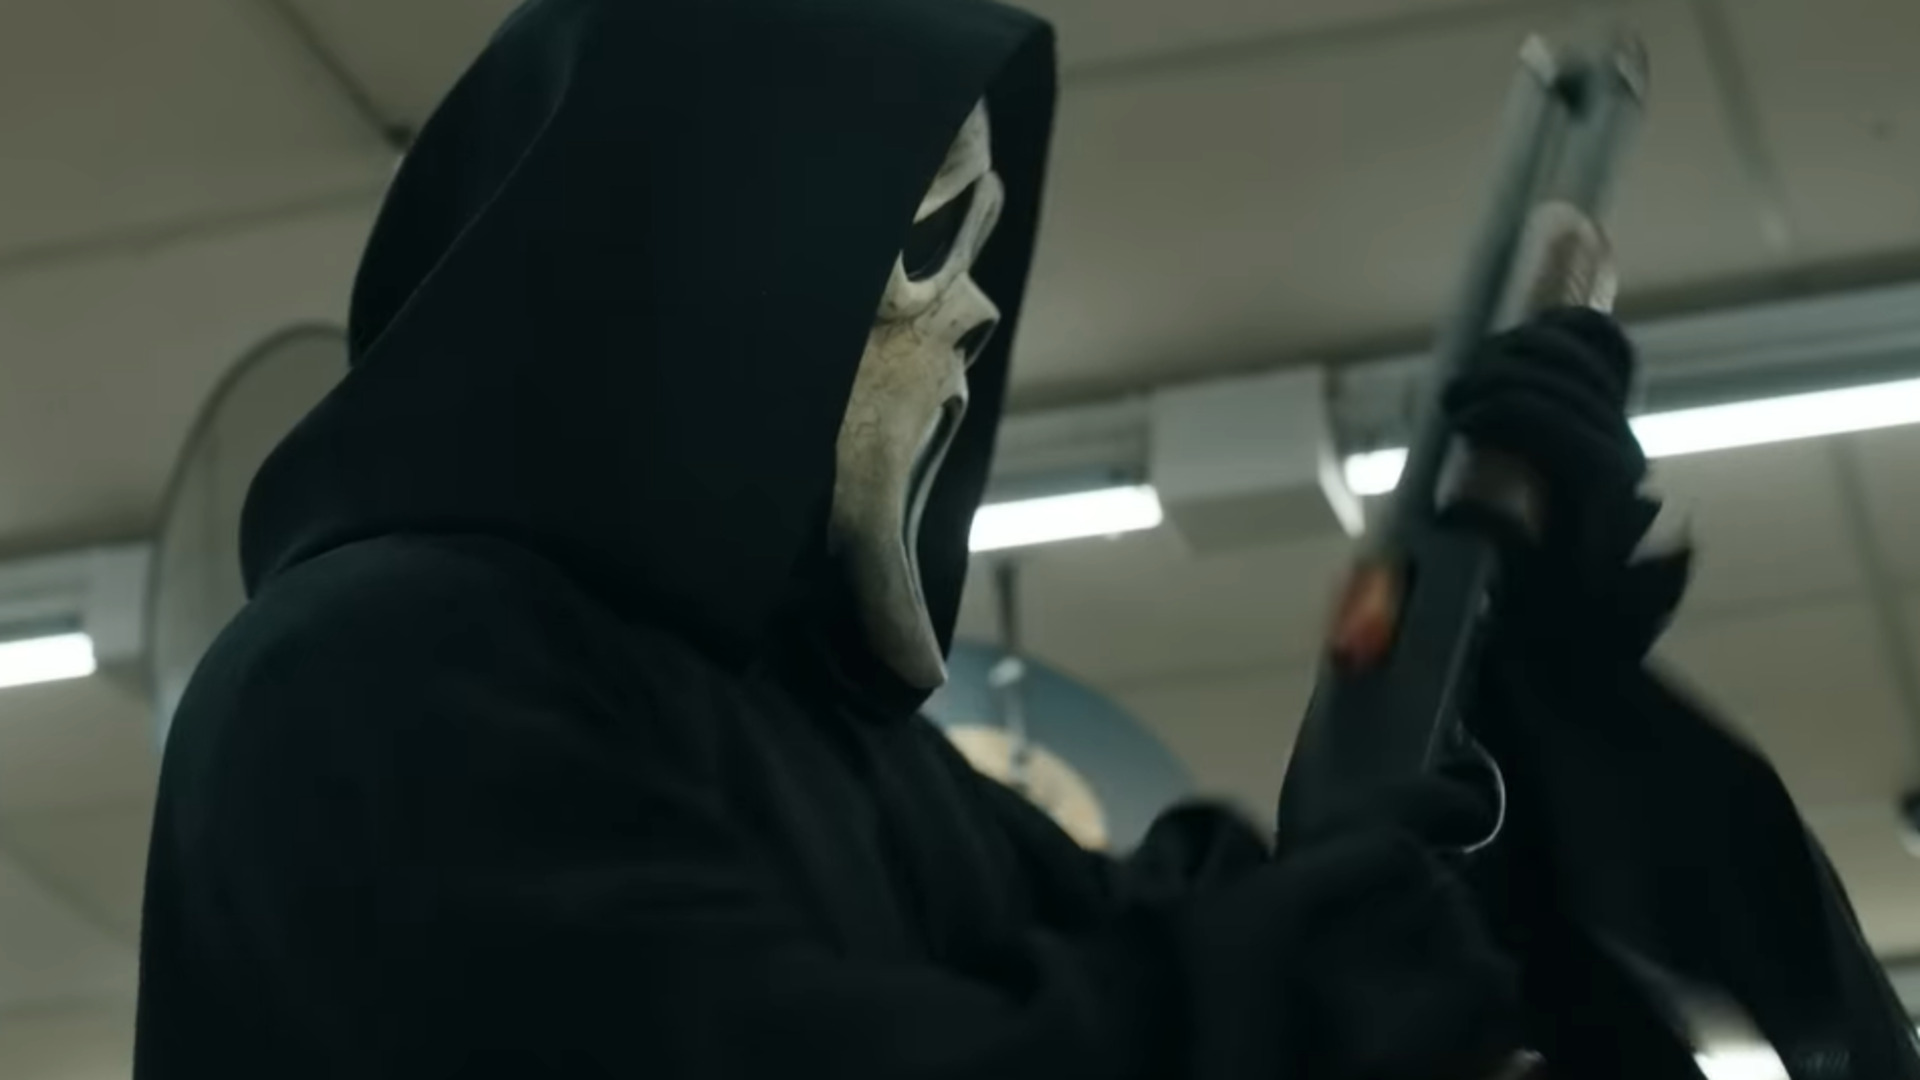 Watch Ghostface dodge bullets and wield a shotgun in a new Scream